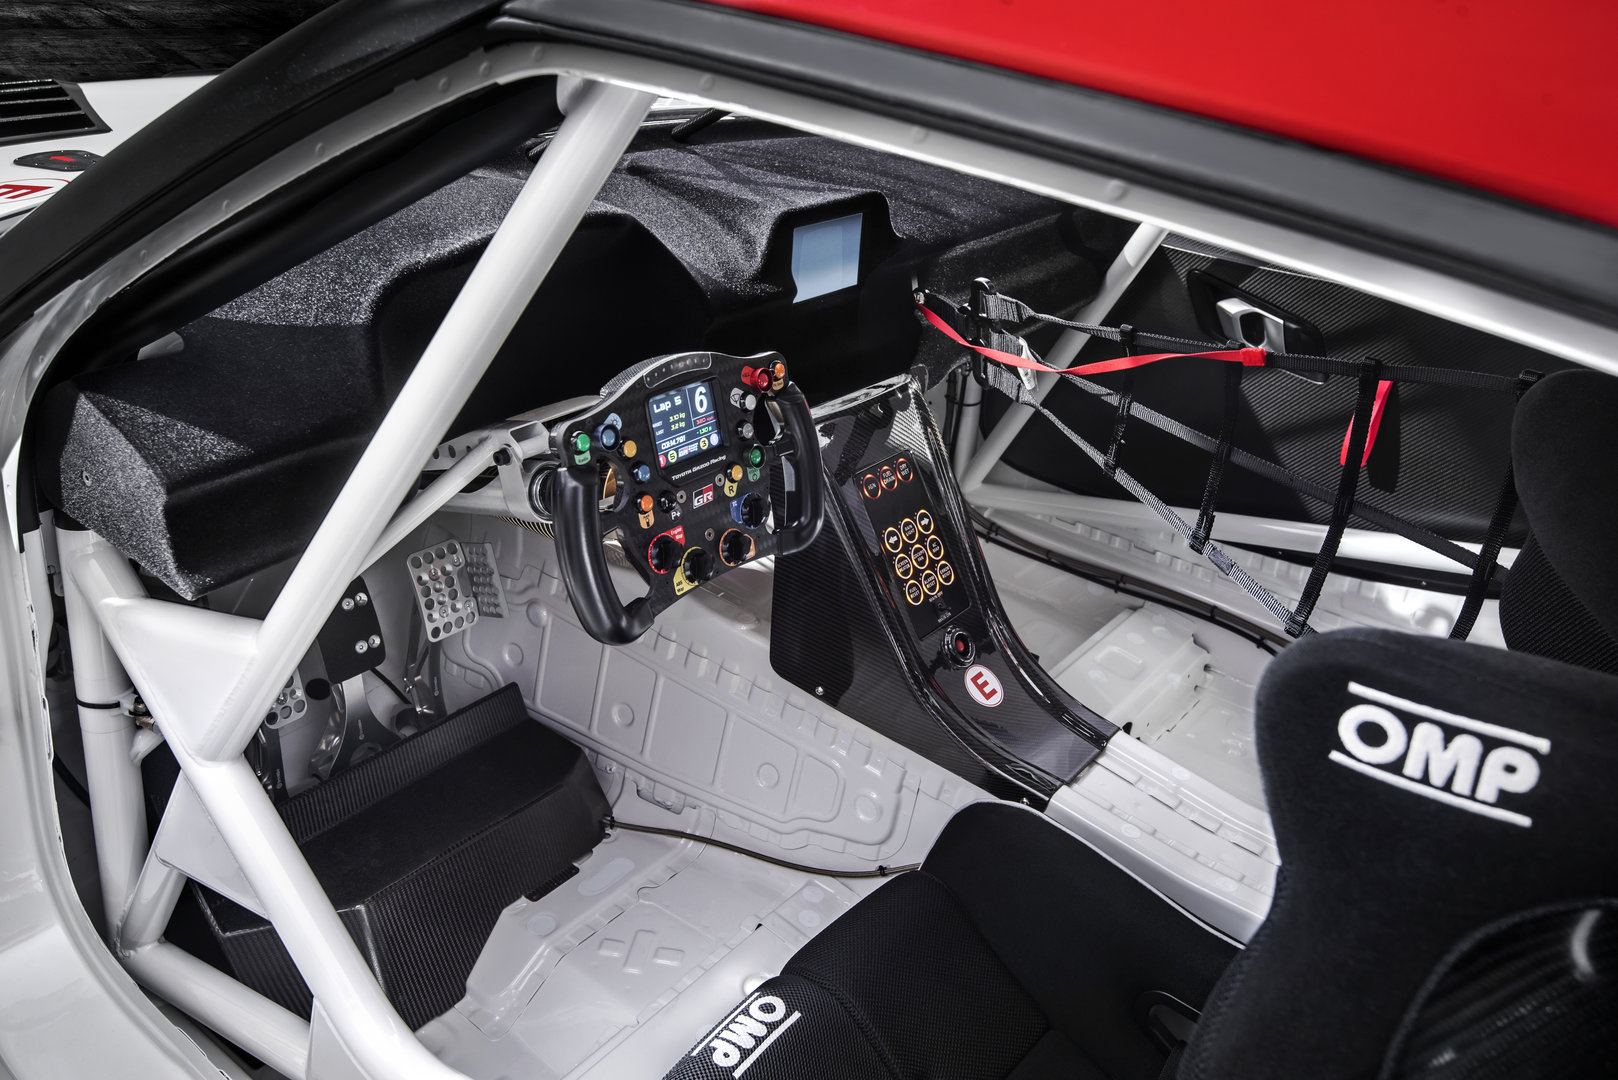 Toyota GR Supra Racing Concept 39